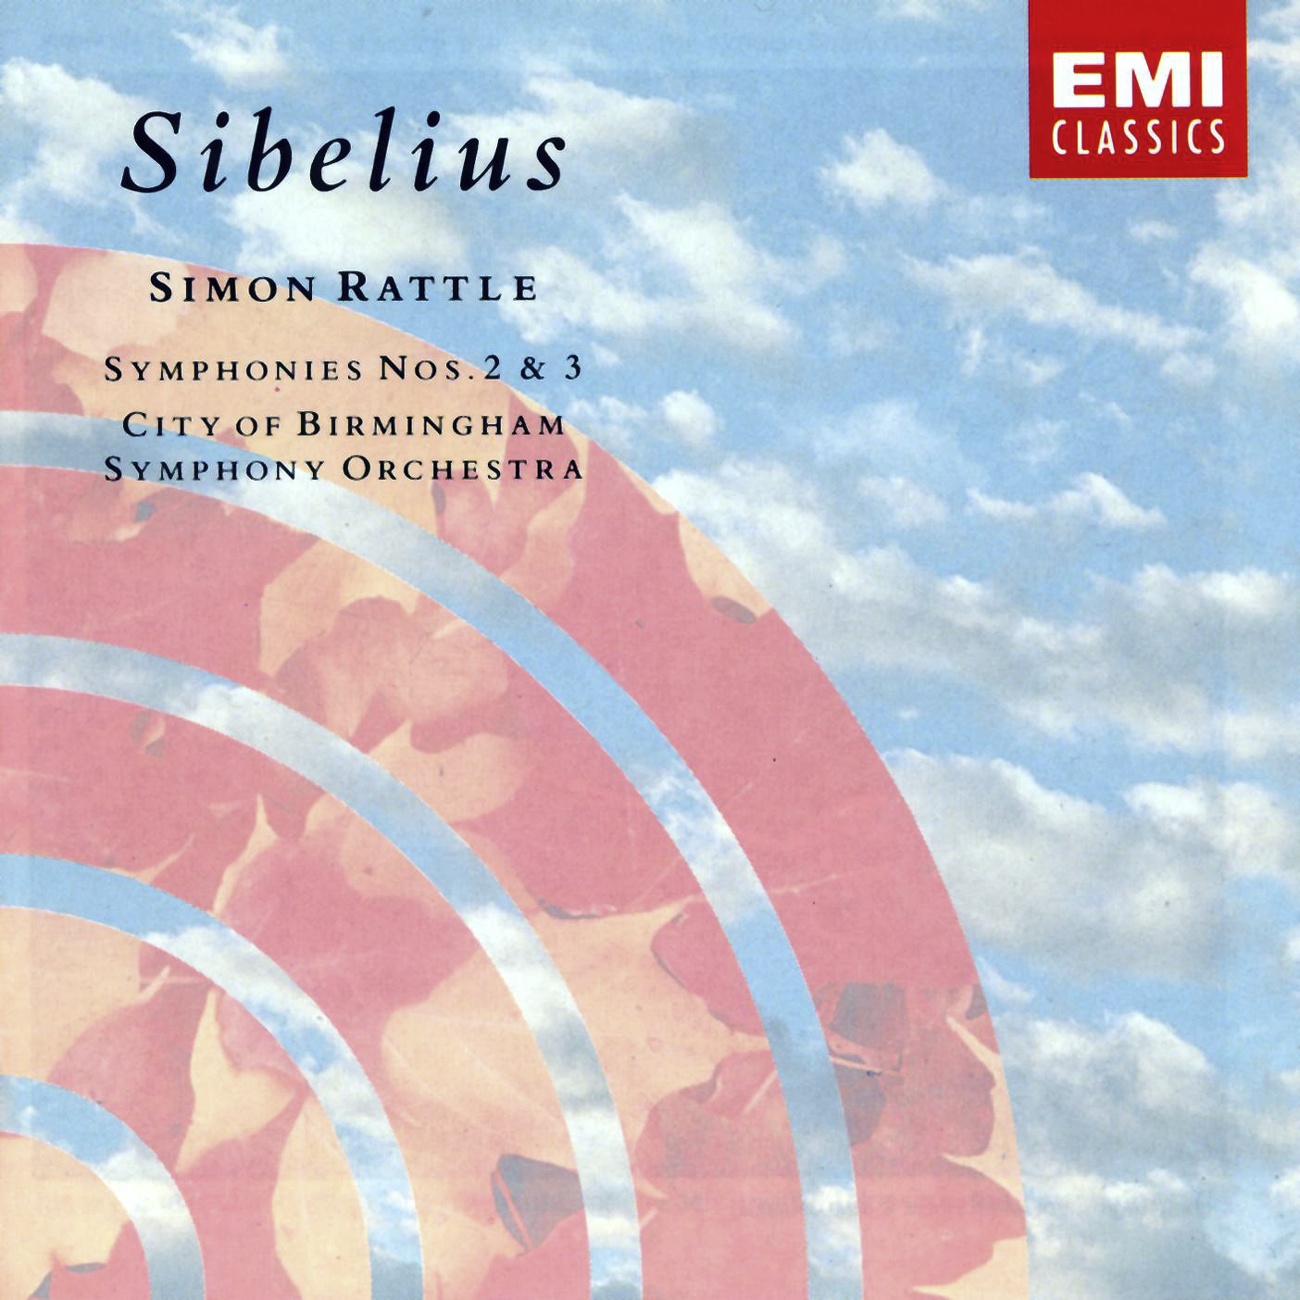 Sibelius: Symphony No. 3 in C, Op. 52: I. Allegro moderato